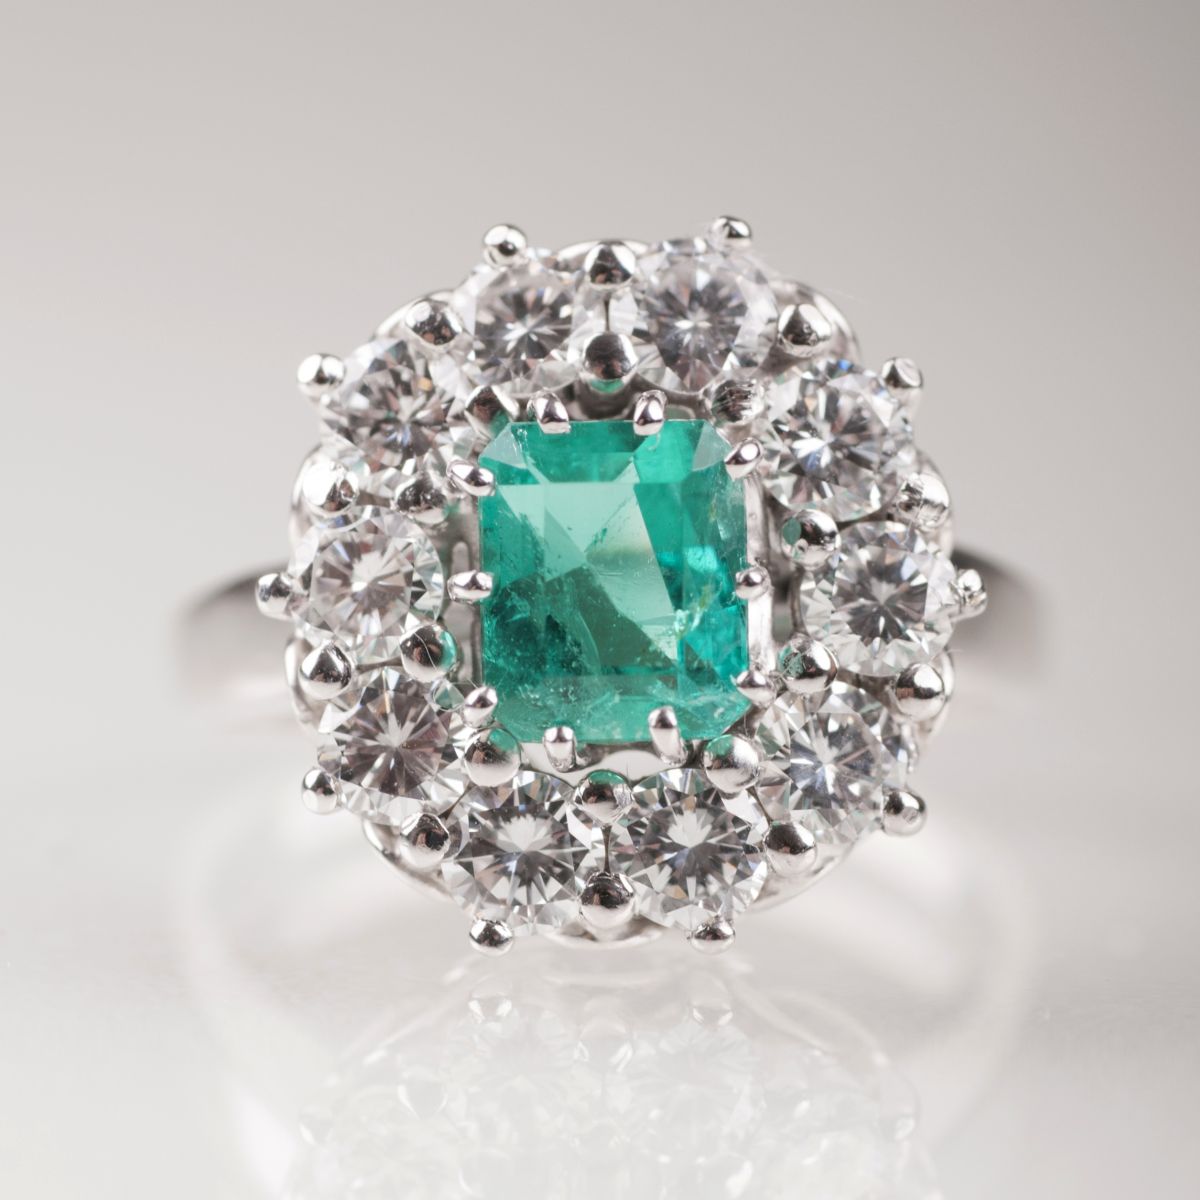 A Vintage emerald diamond ring